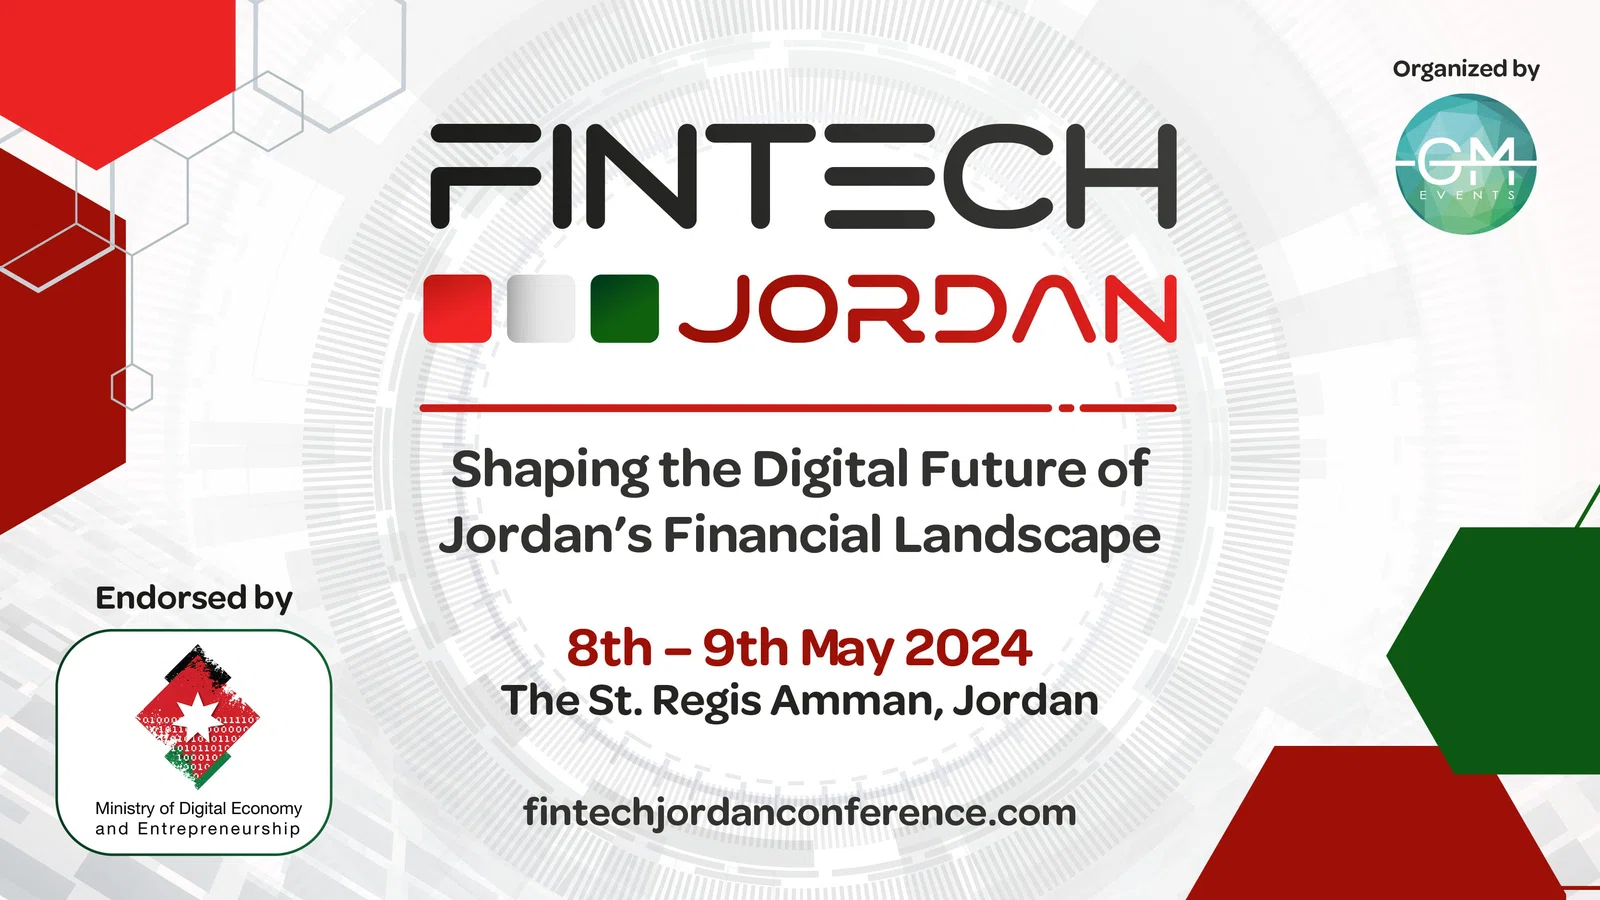 Fintech Jordan Conference 2024